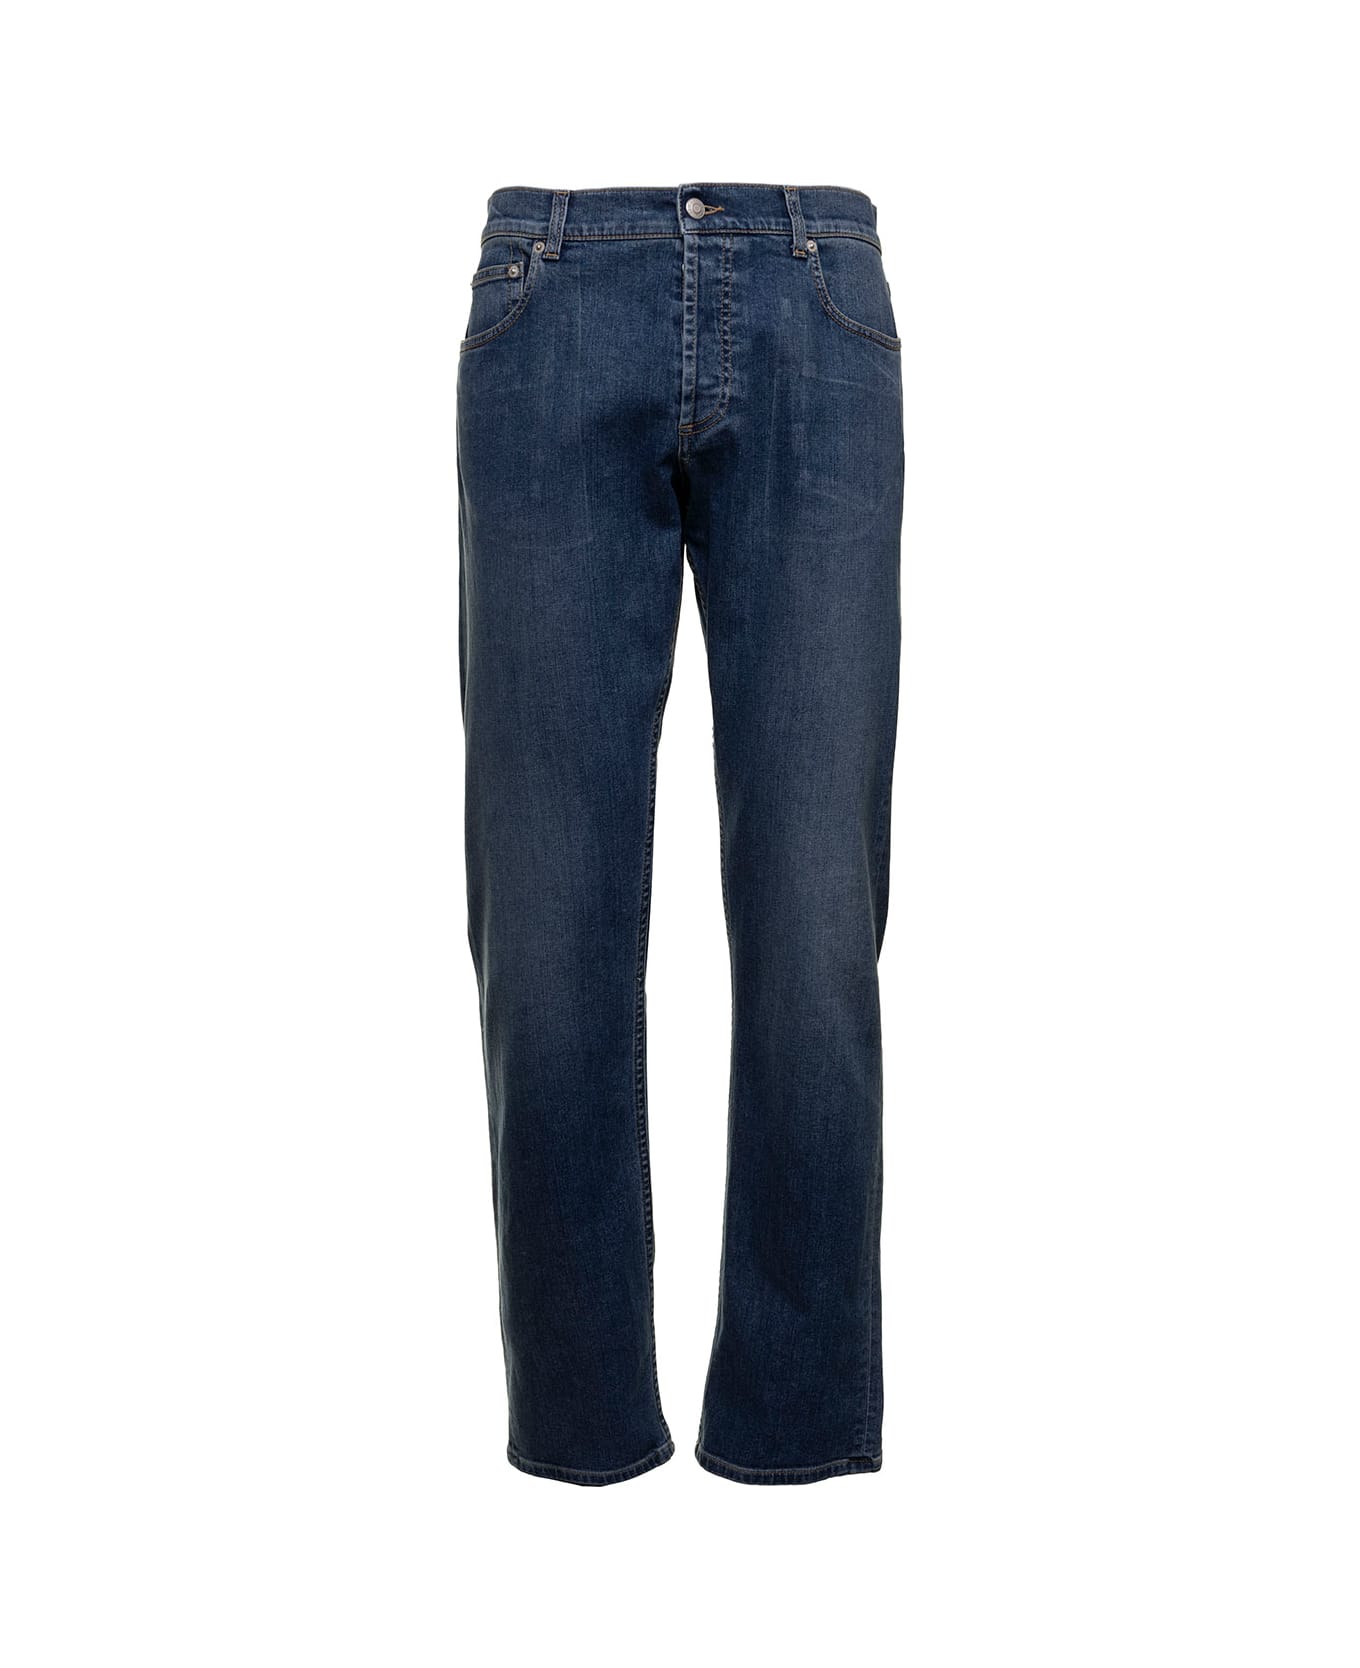 Alexander McQueen Man's Five Pockets Blue Denim Jeans With Logo - BLUE WASHED